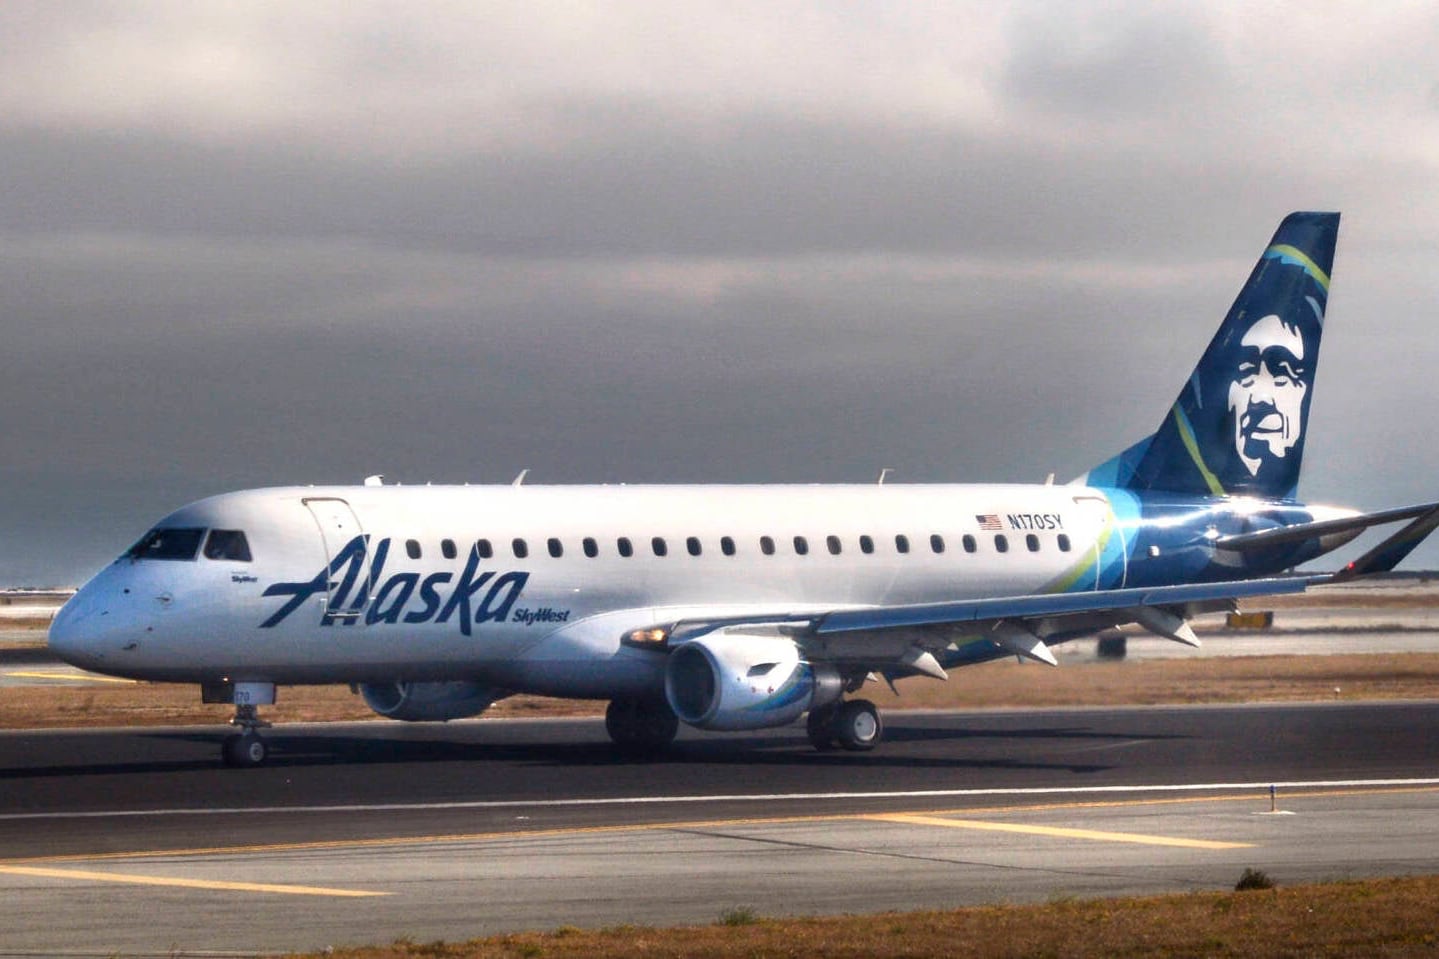 alaska-airlines-skywest-embraer-scaled-e1598564890128-2